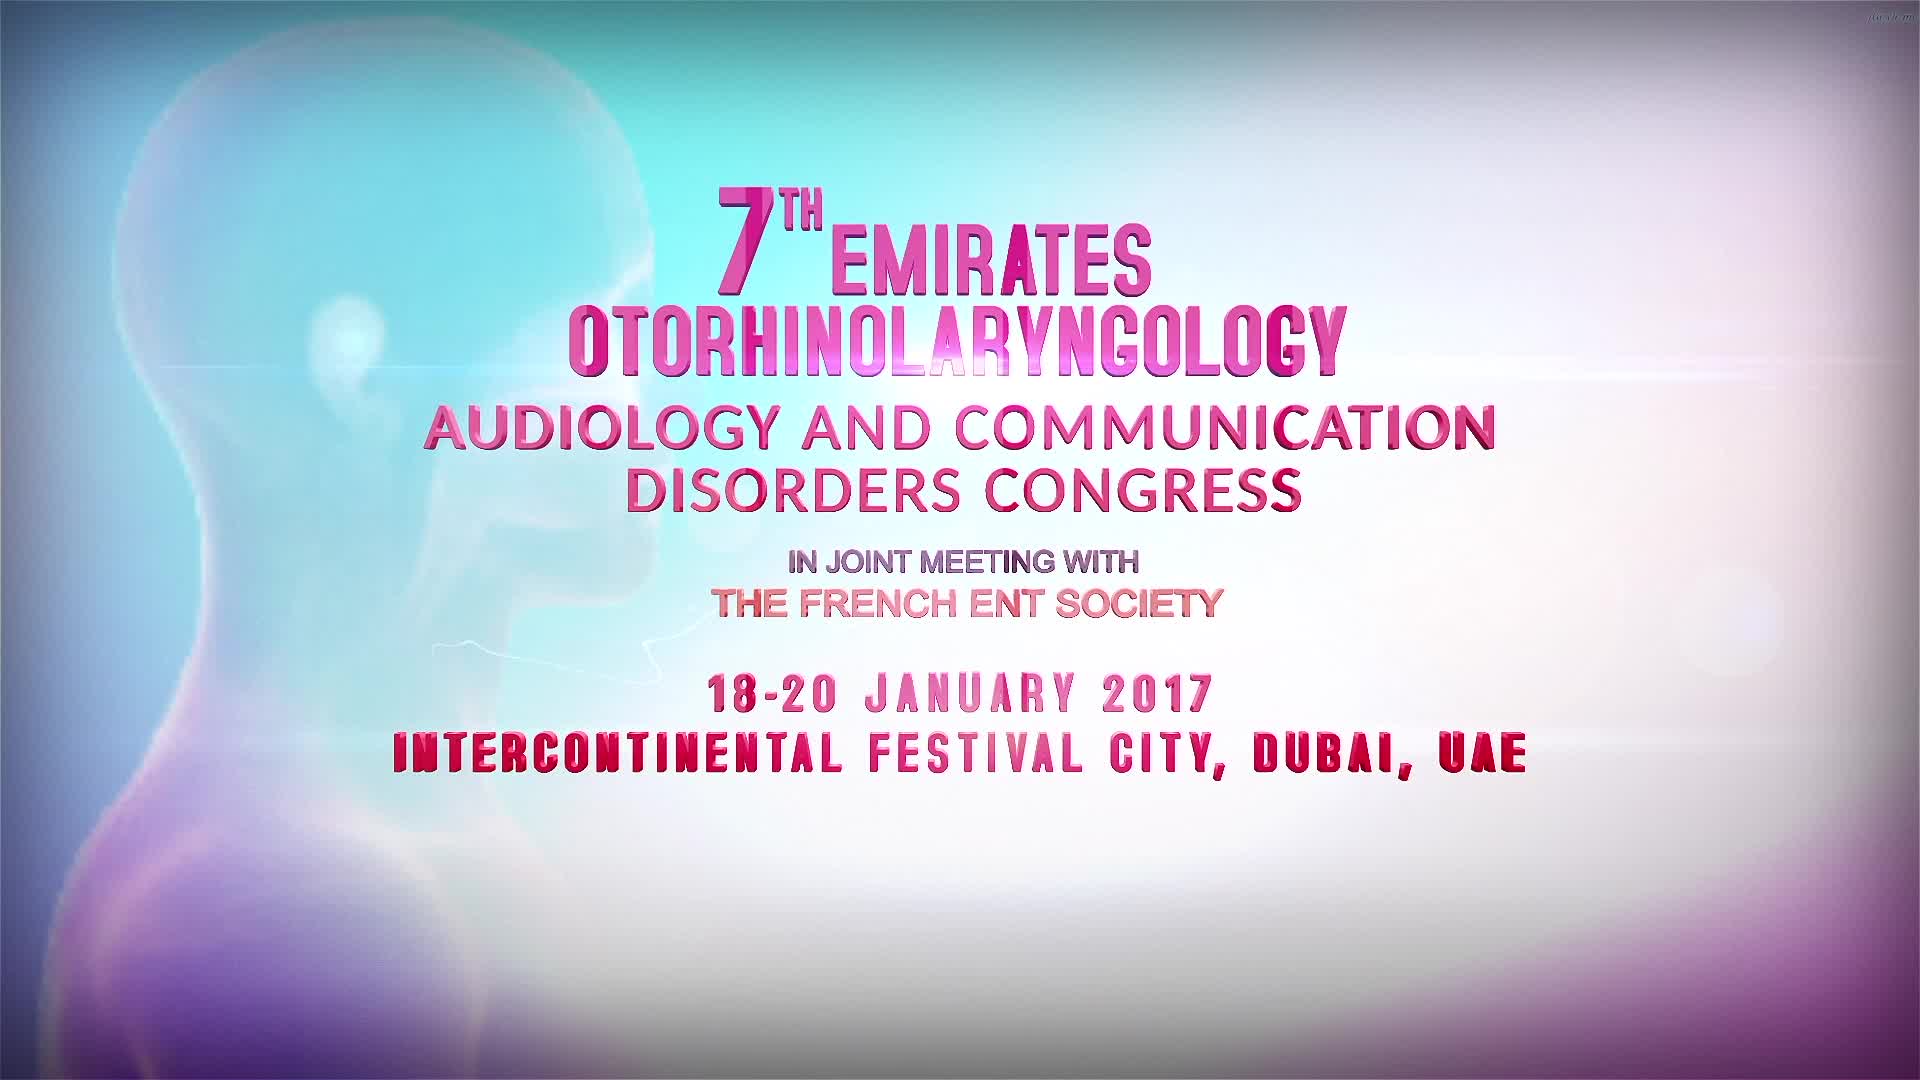 7th Emirates Otorhinolaryngology Audiology and Communication Disorders Congress 2017